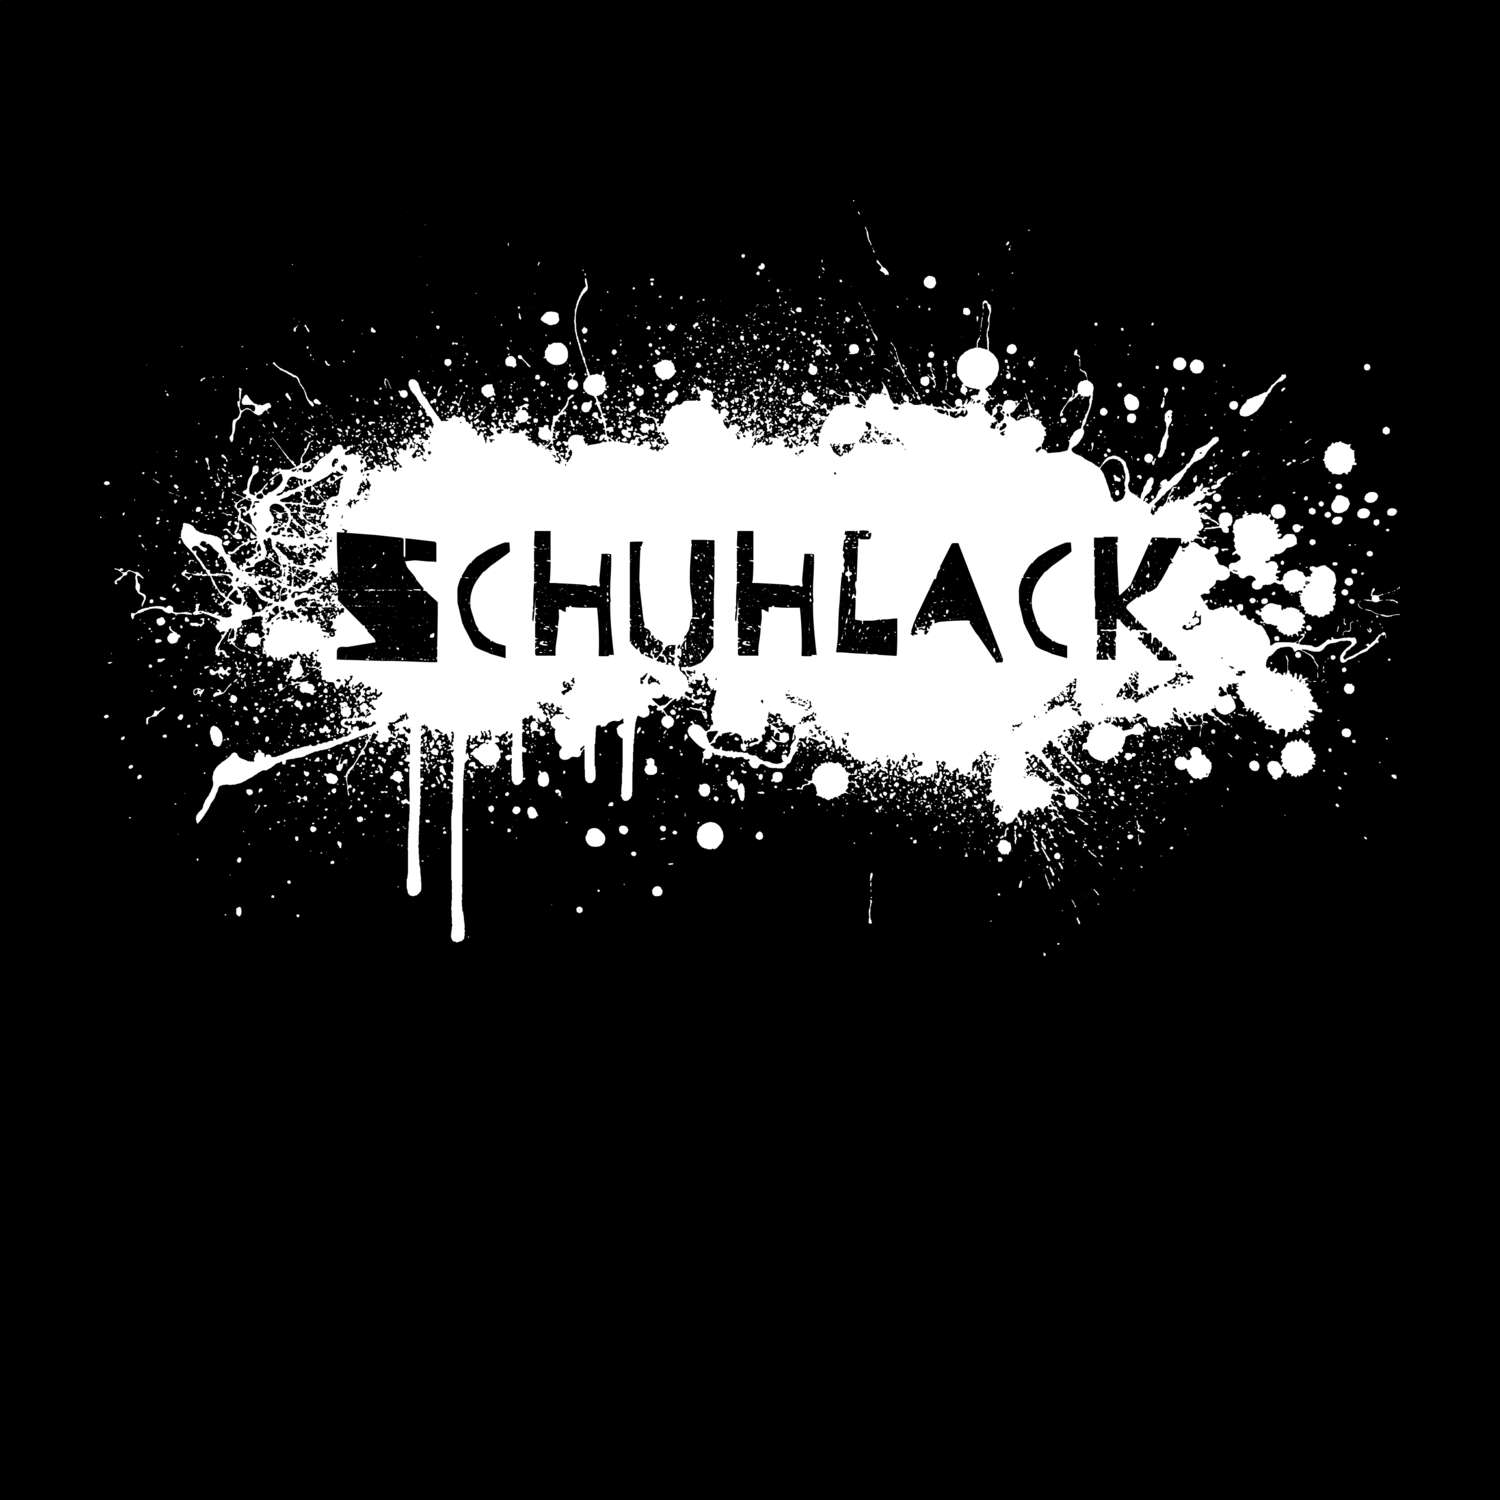 Schuhlack T-Shirt »Paint Splash Punk«